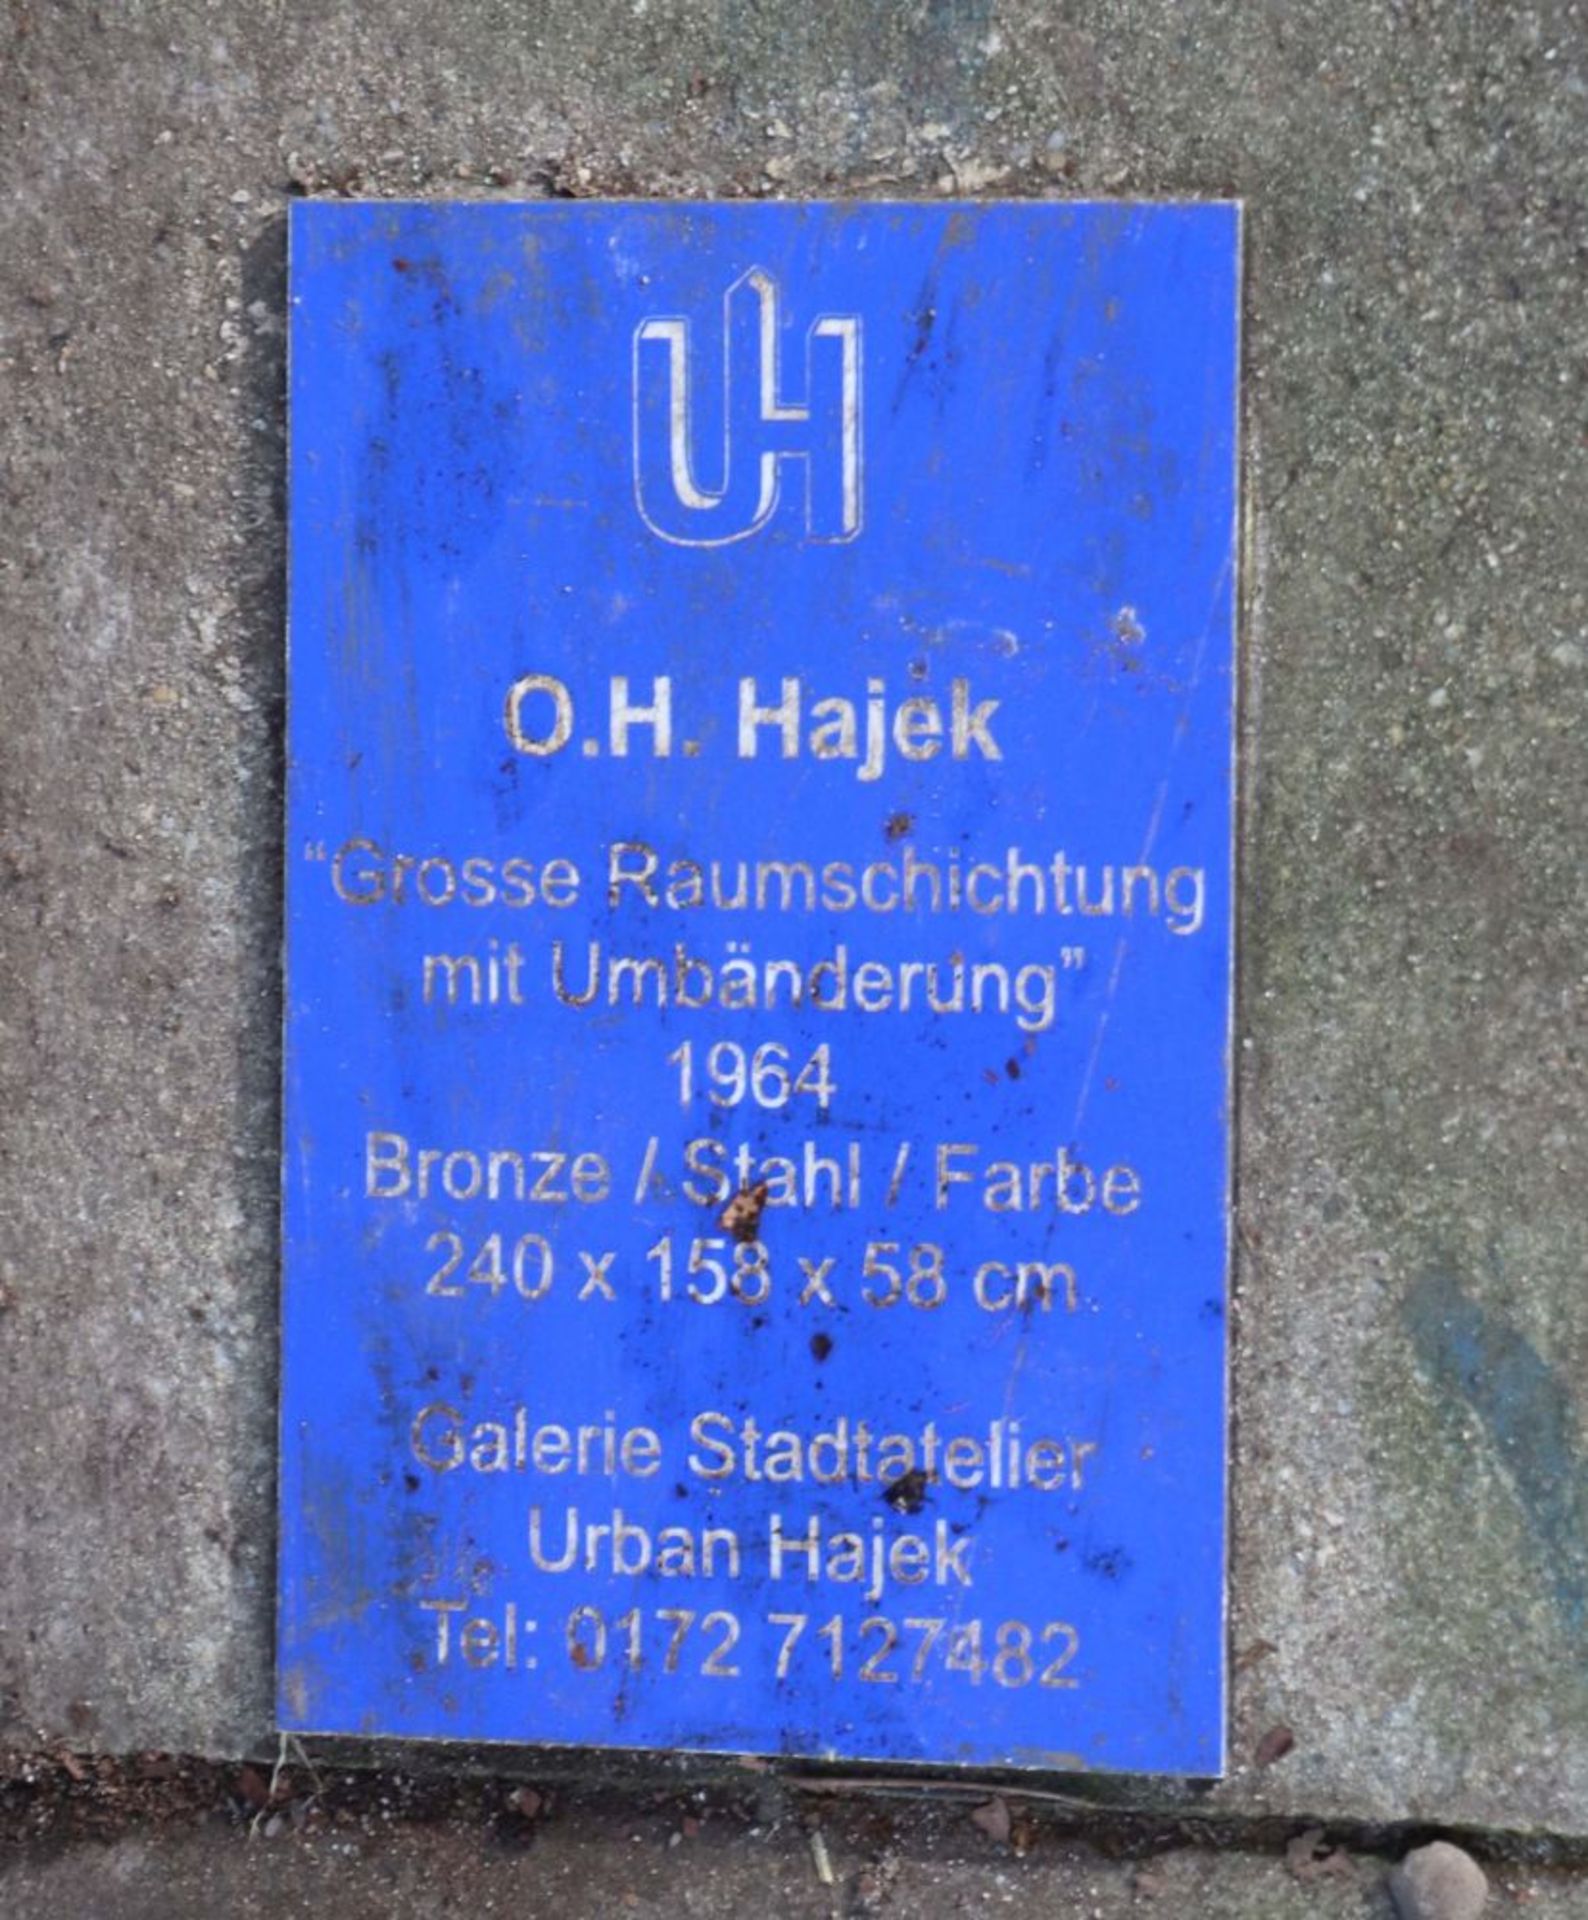 Hajek, Prof. Otto Herbert Kaltenbach / - Image 7 of 8